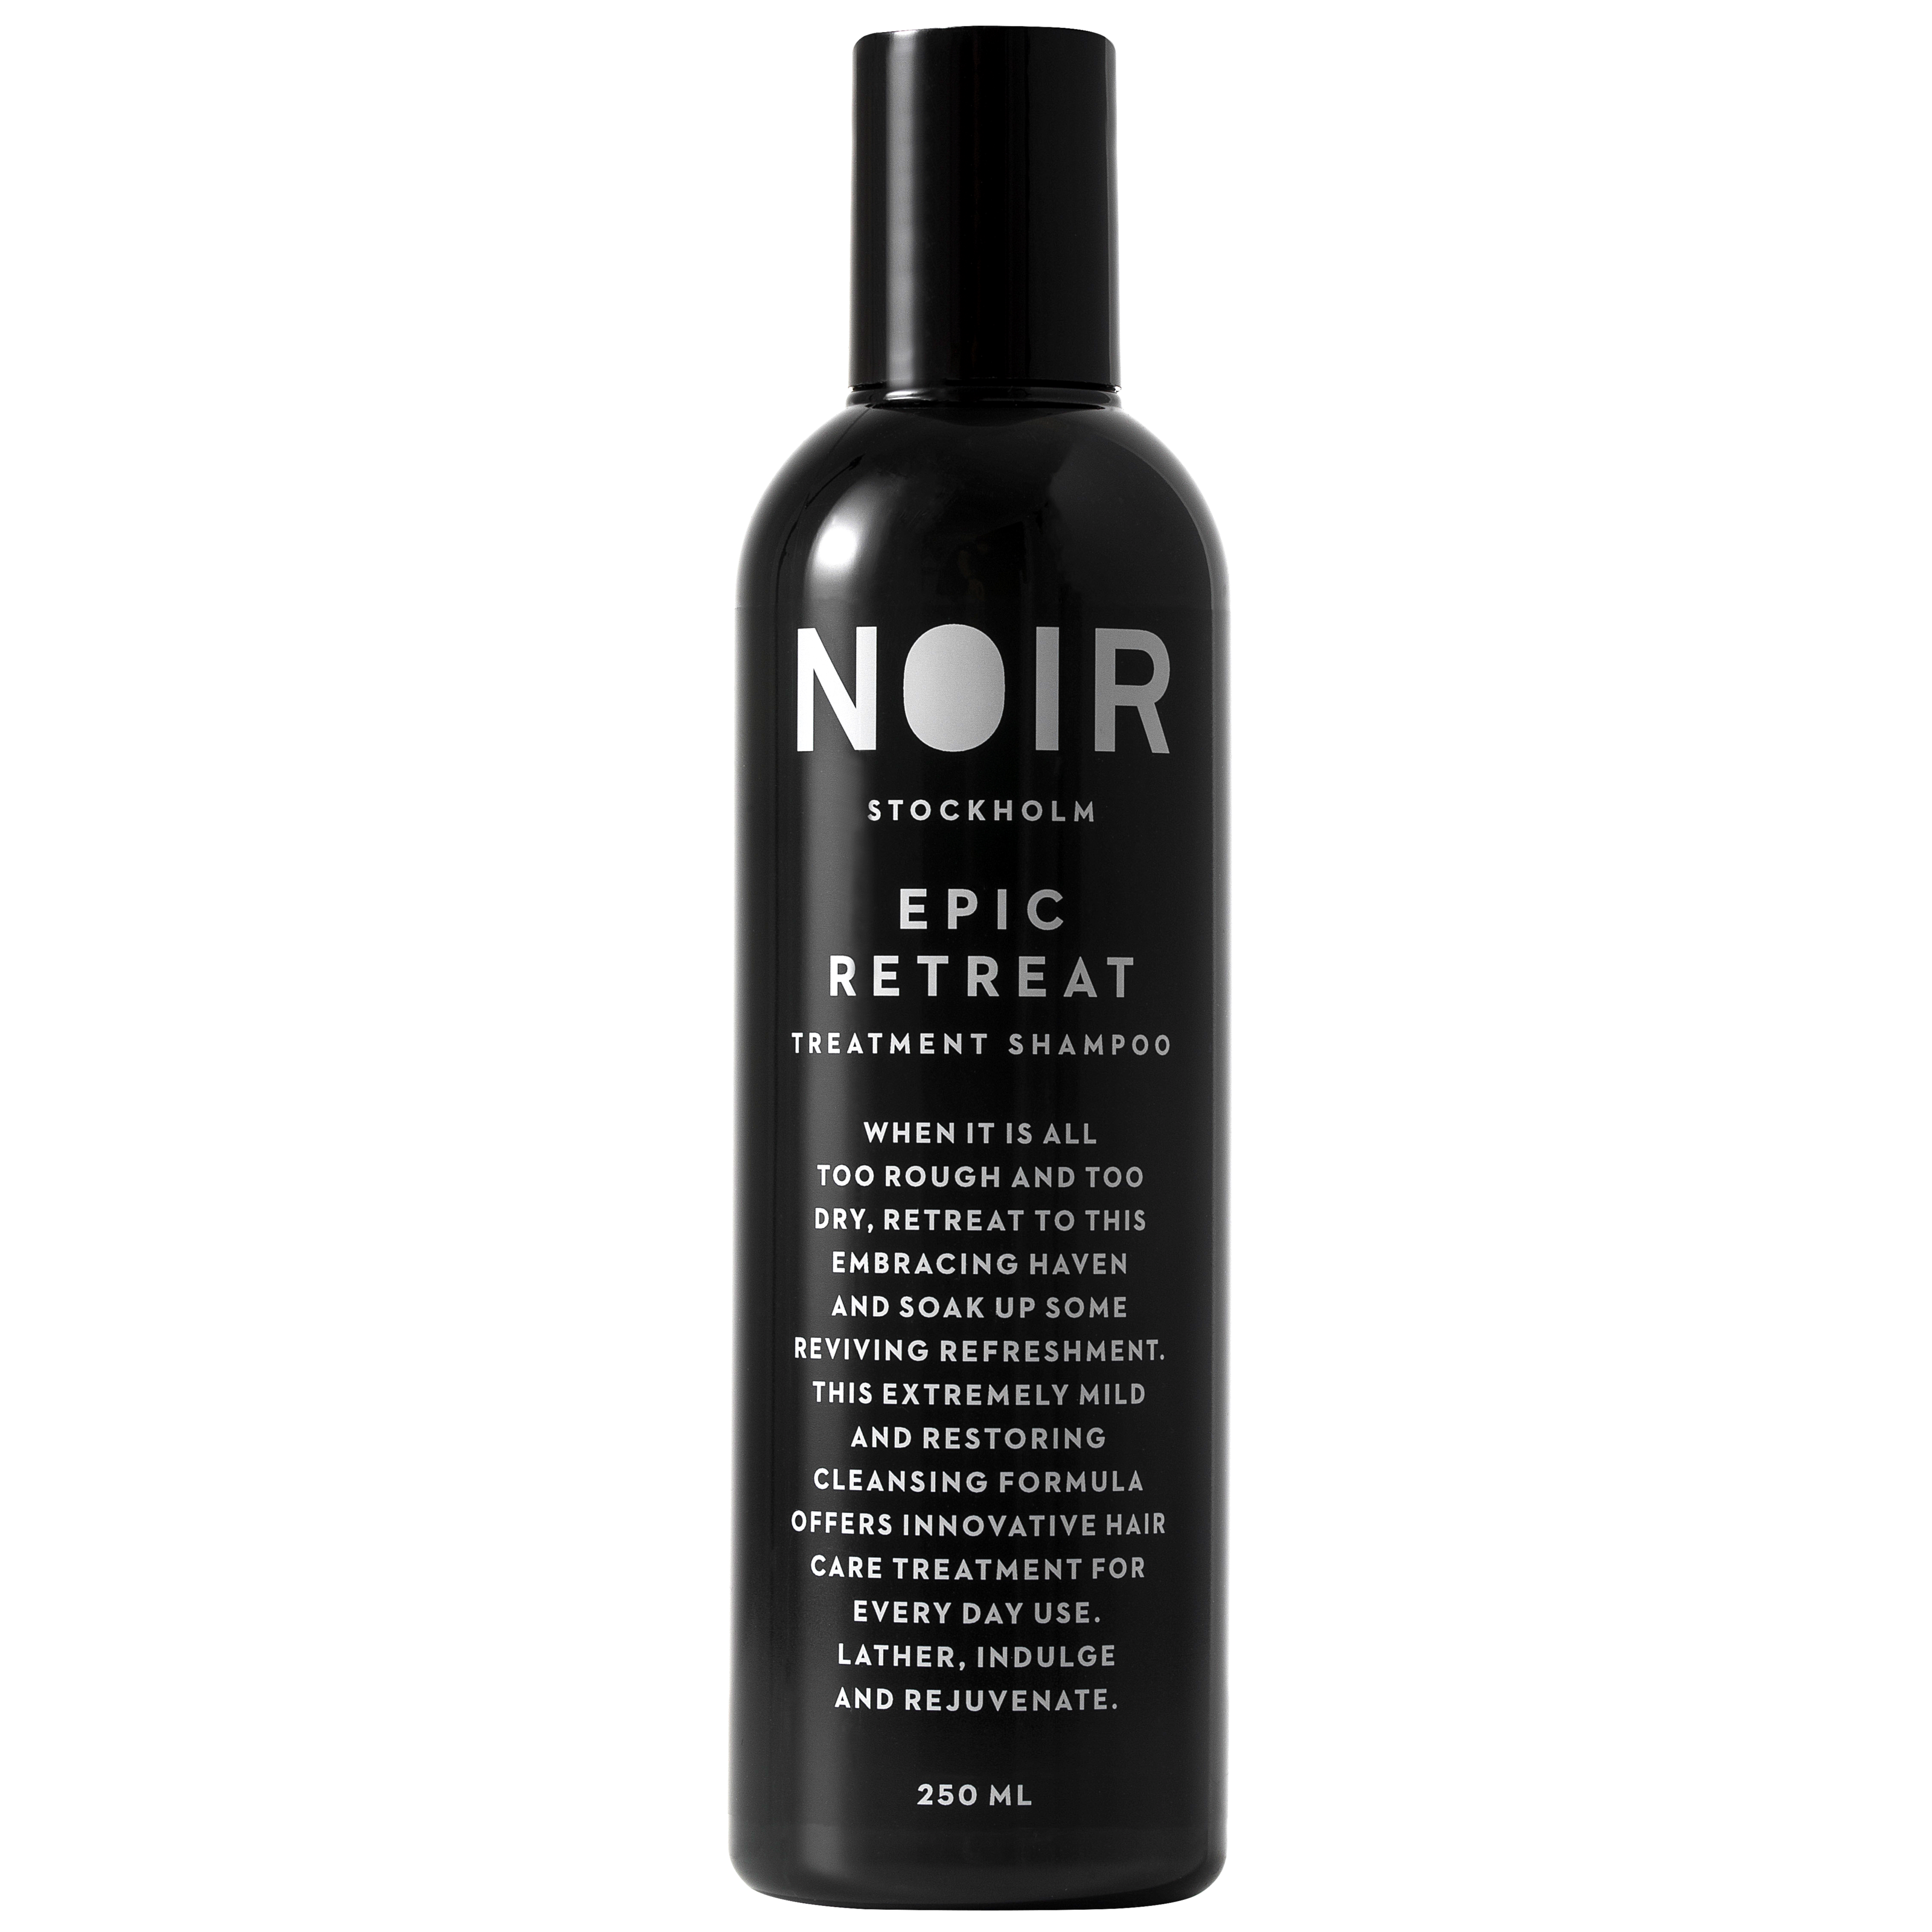 NOIR Stockholm Epic Retreat - Treatment Shampoo 250 ml